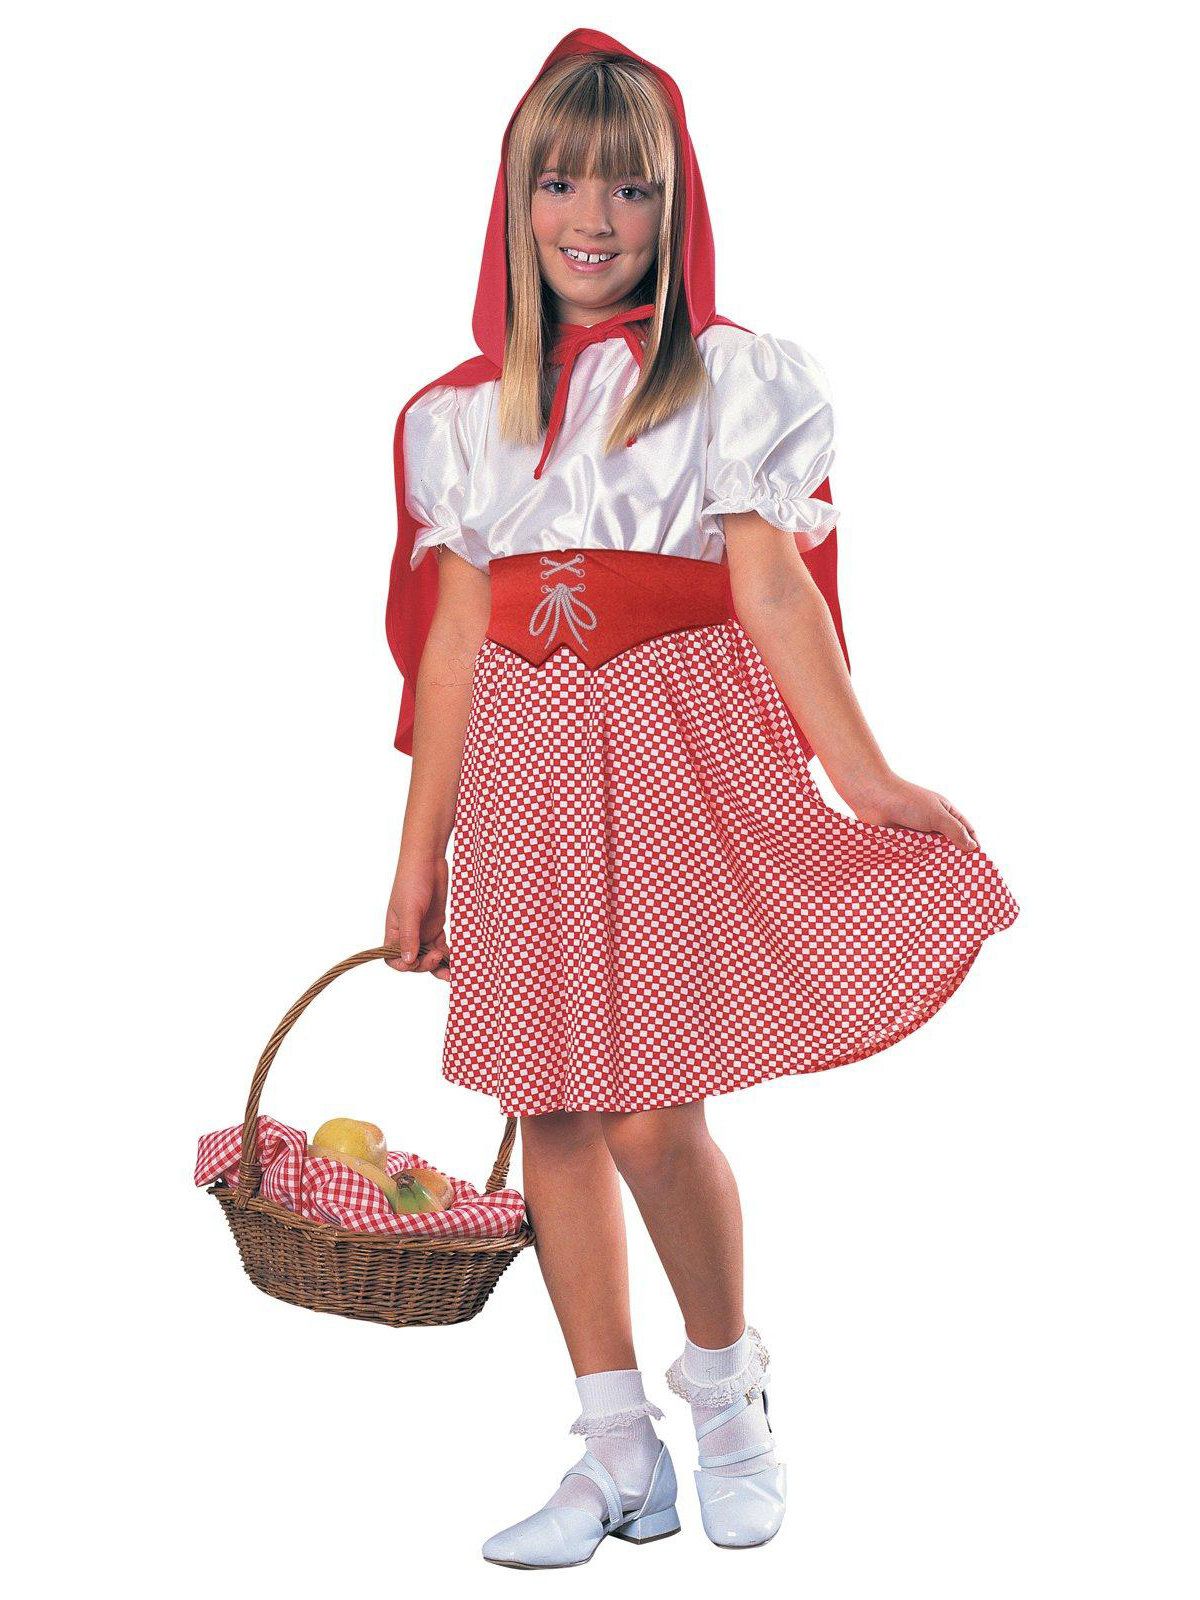 Kids Red Riding Hood Classic Costume - costumes.com